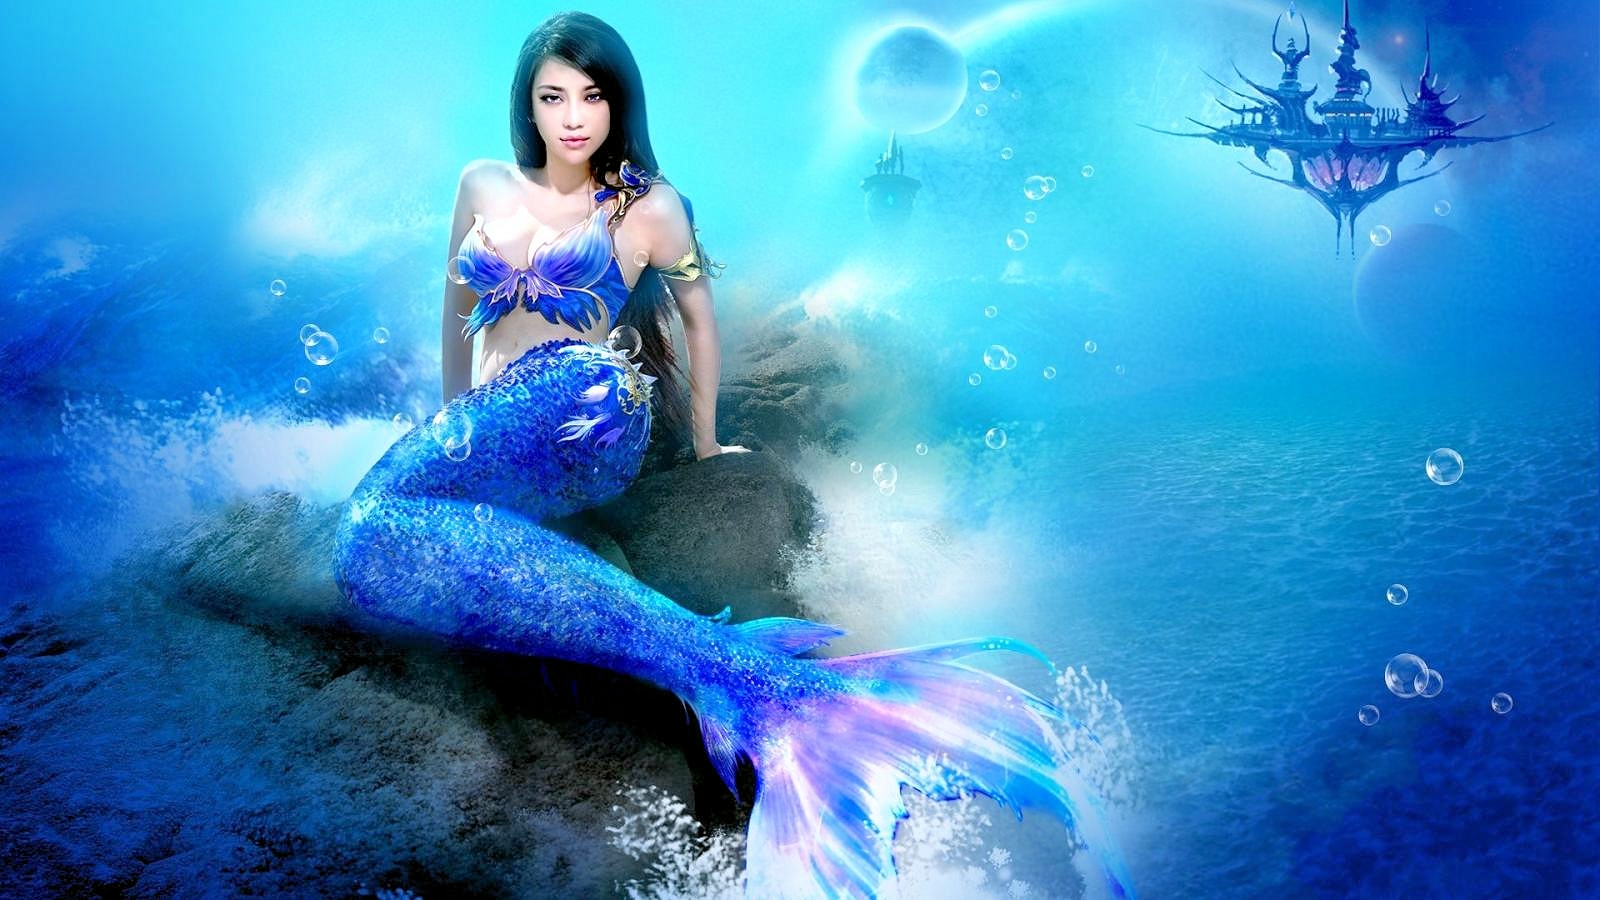 Mermaids Image Blue Mermaid HD Wallpaper And Background Photos